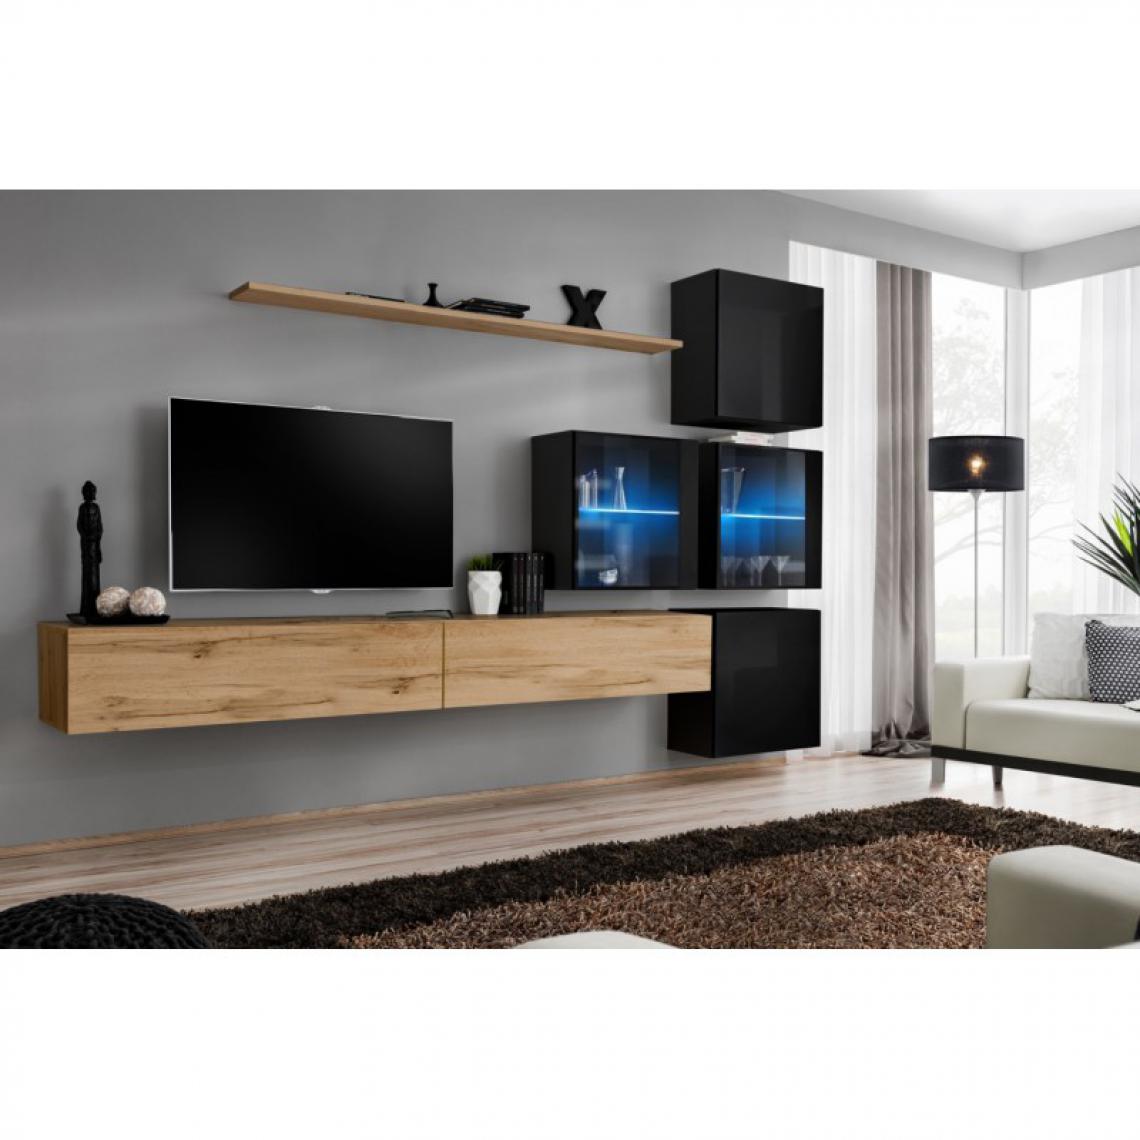 Ac-Deco - Meuble TV Mural Design Switch XIX 310cm Naturel & Noir - Meubles TV, Hi-Fi